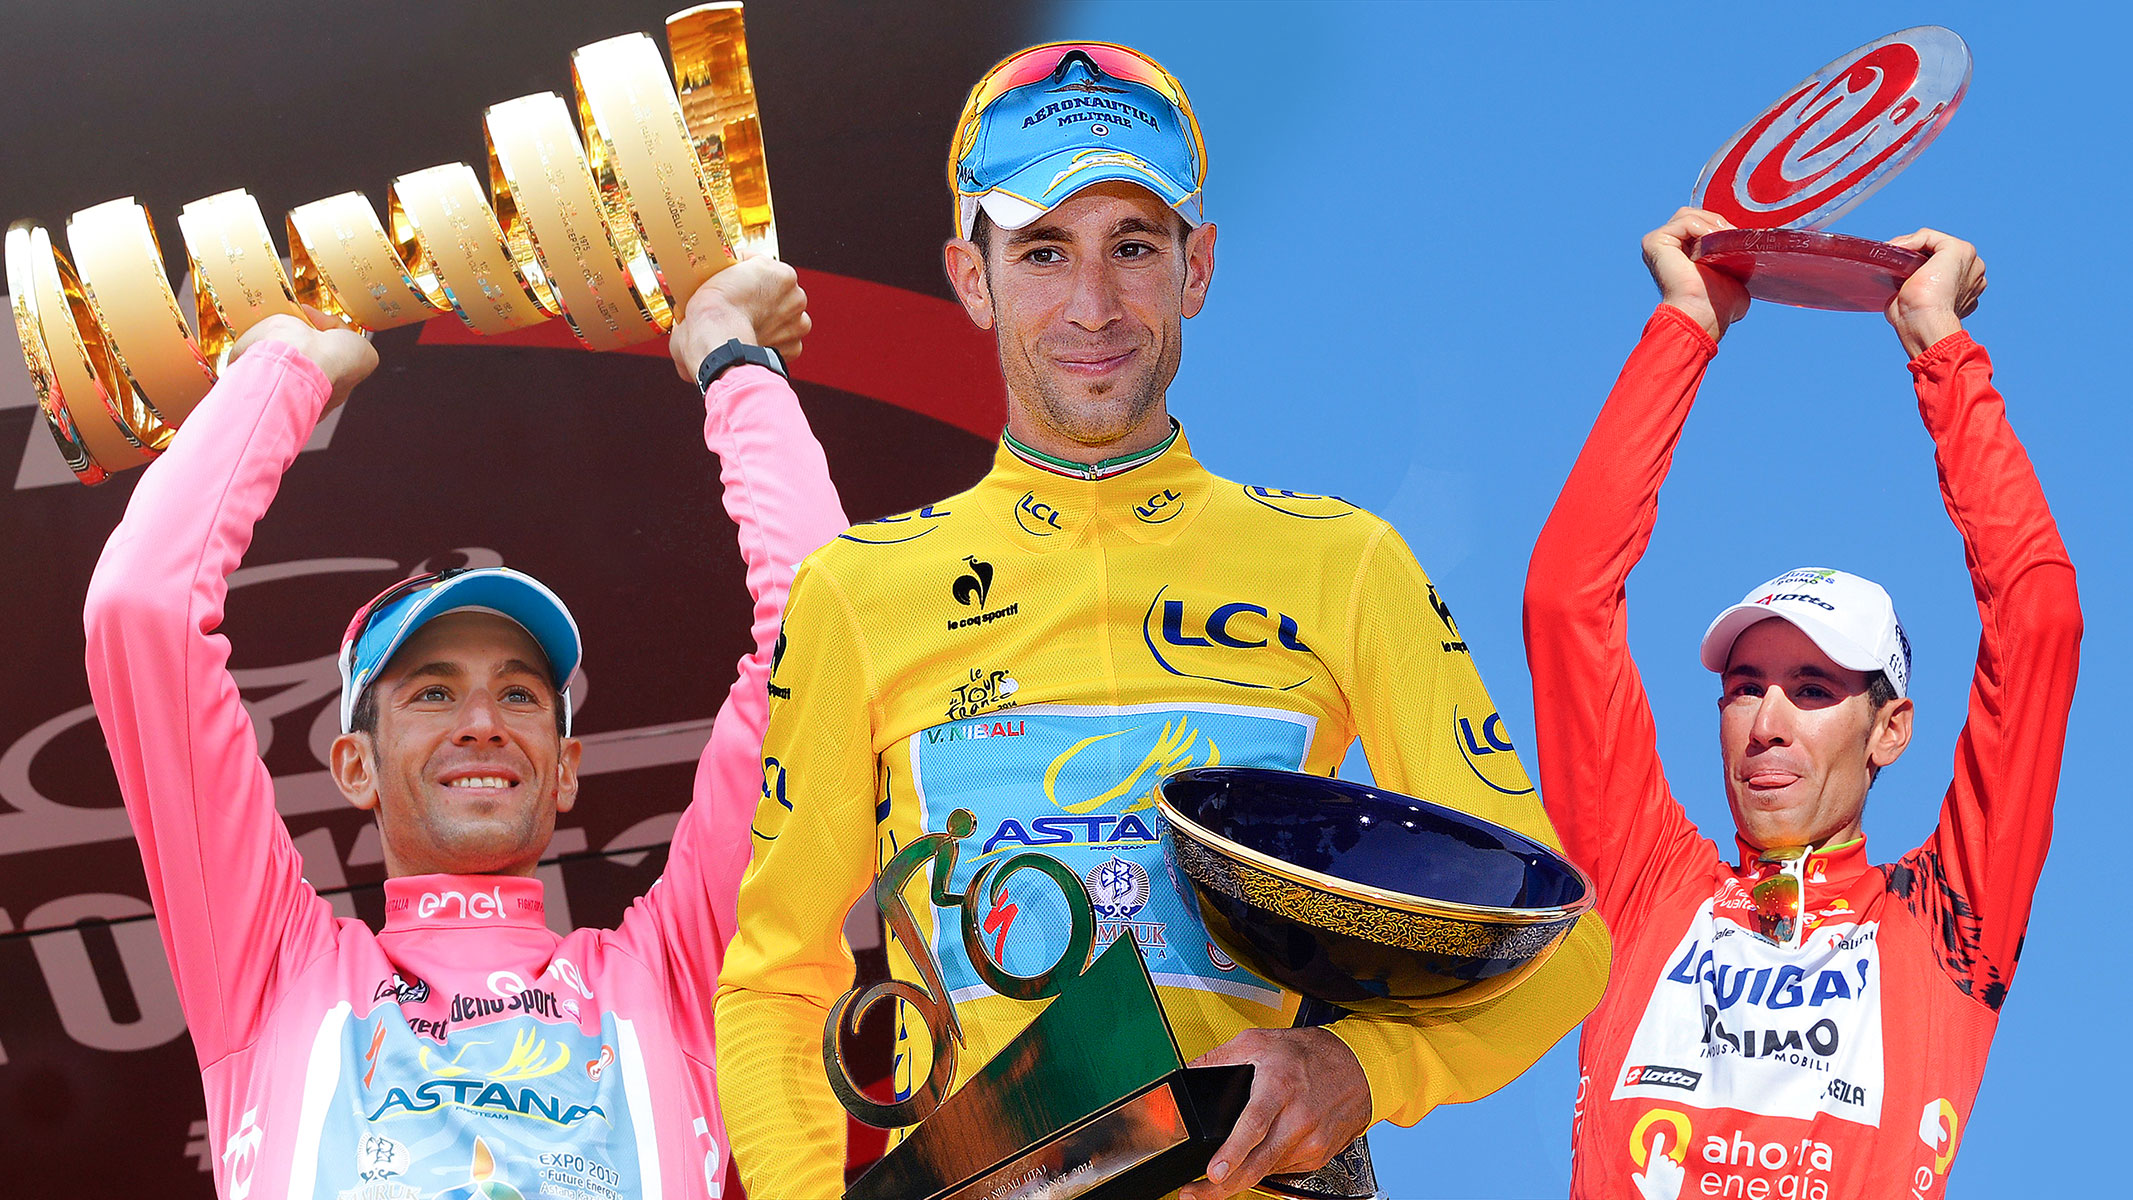 Vincenzo Nibali celebrating wins at the 2016 Giro d'Italia, 2014 Tour de France, and 2010 Vuelta a Espana Getty Images composite